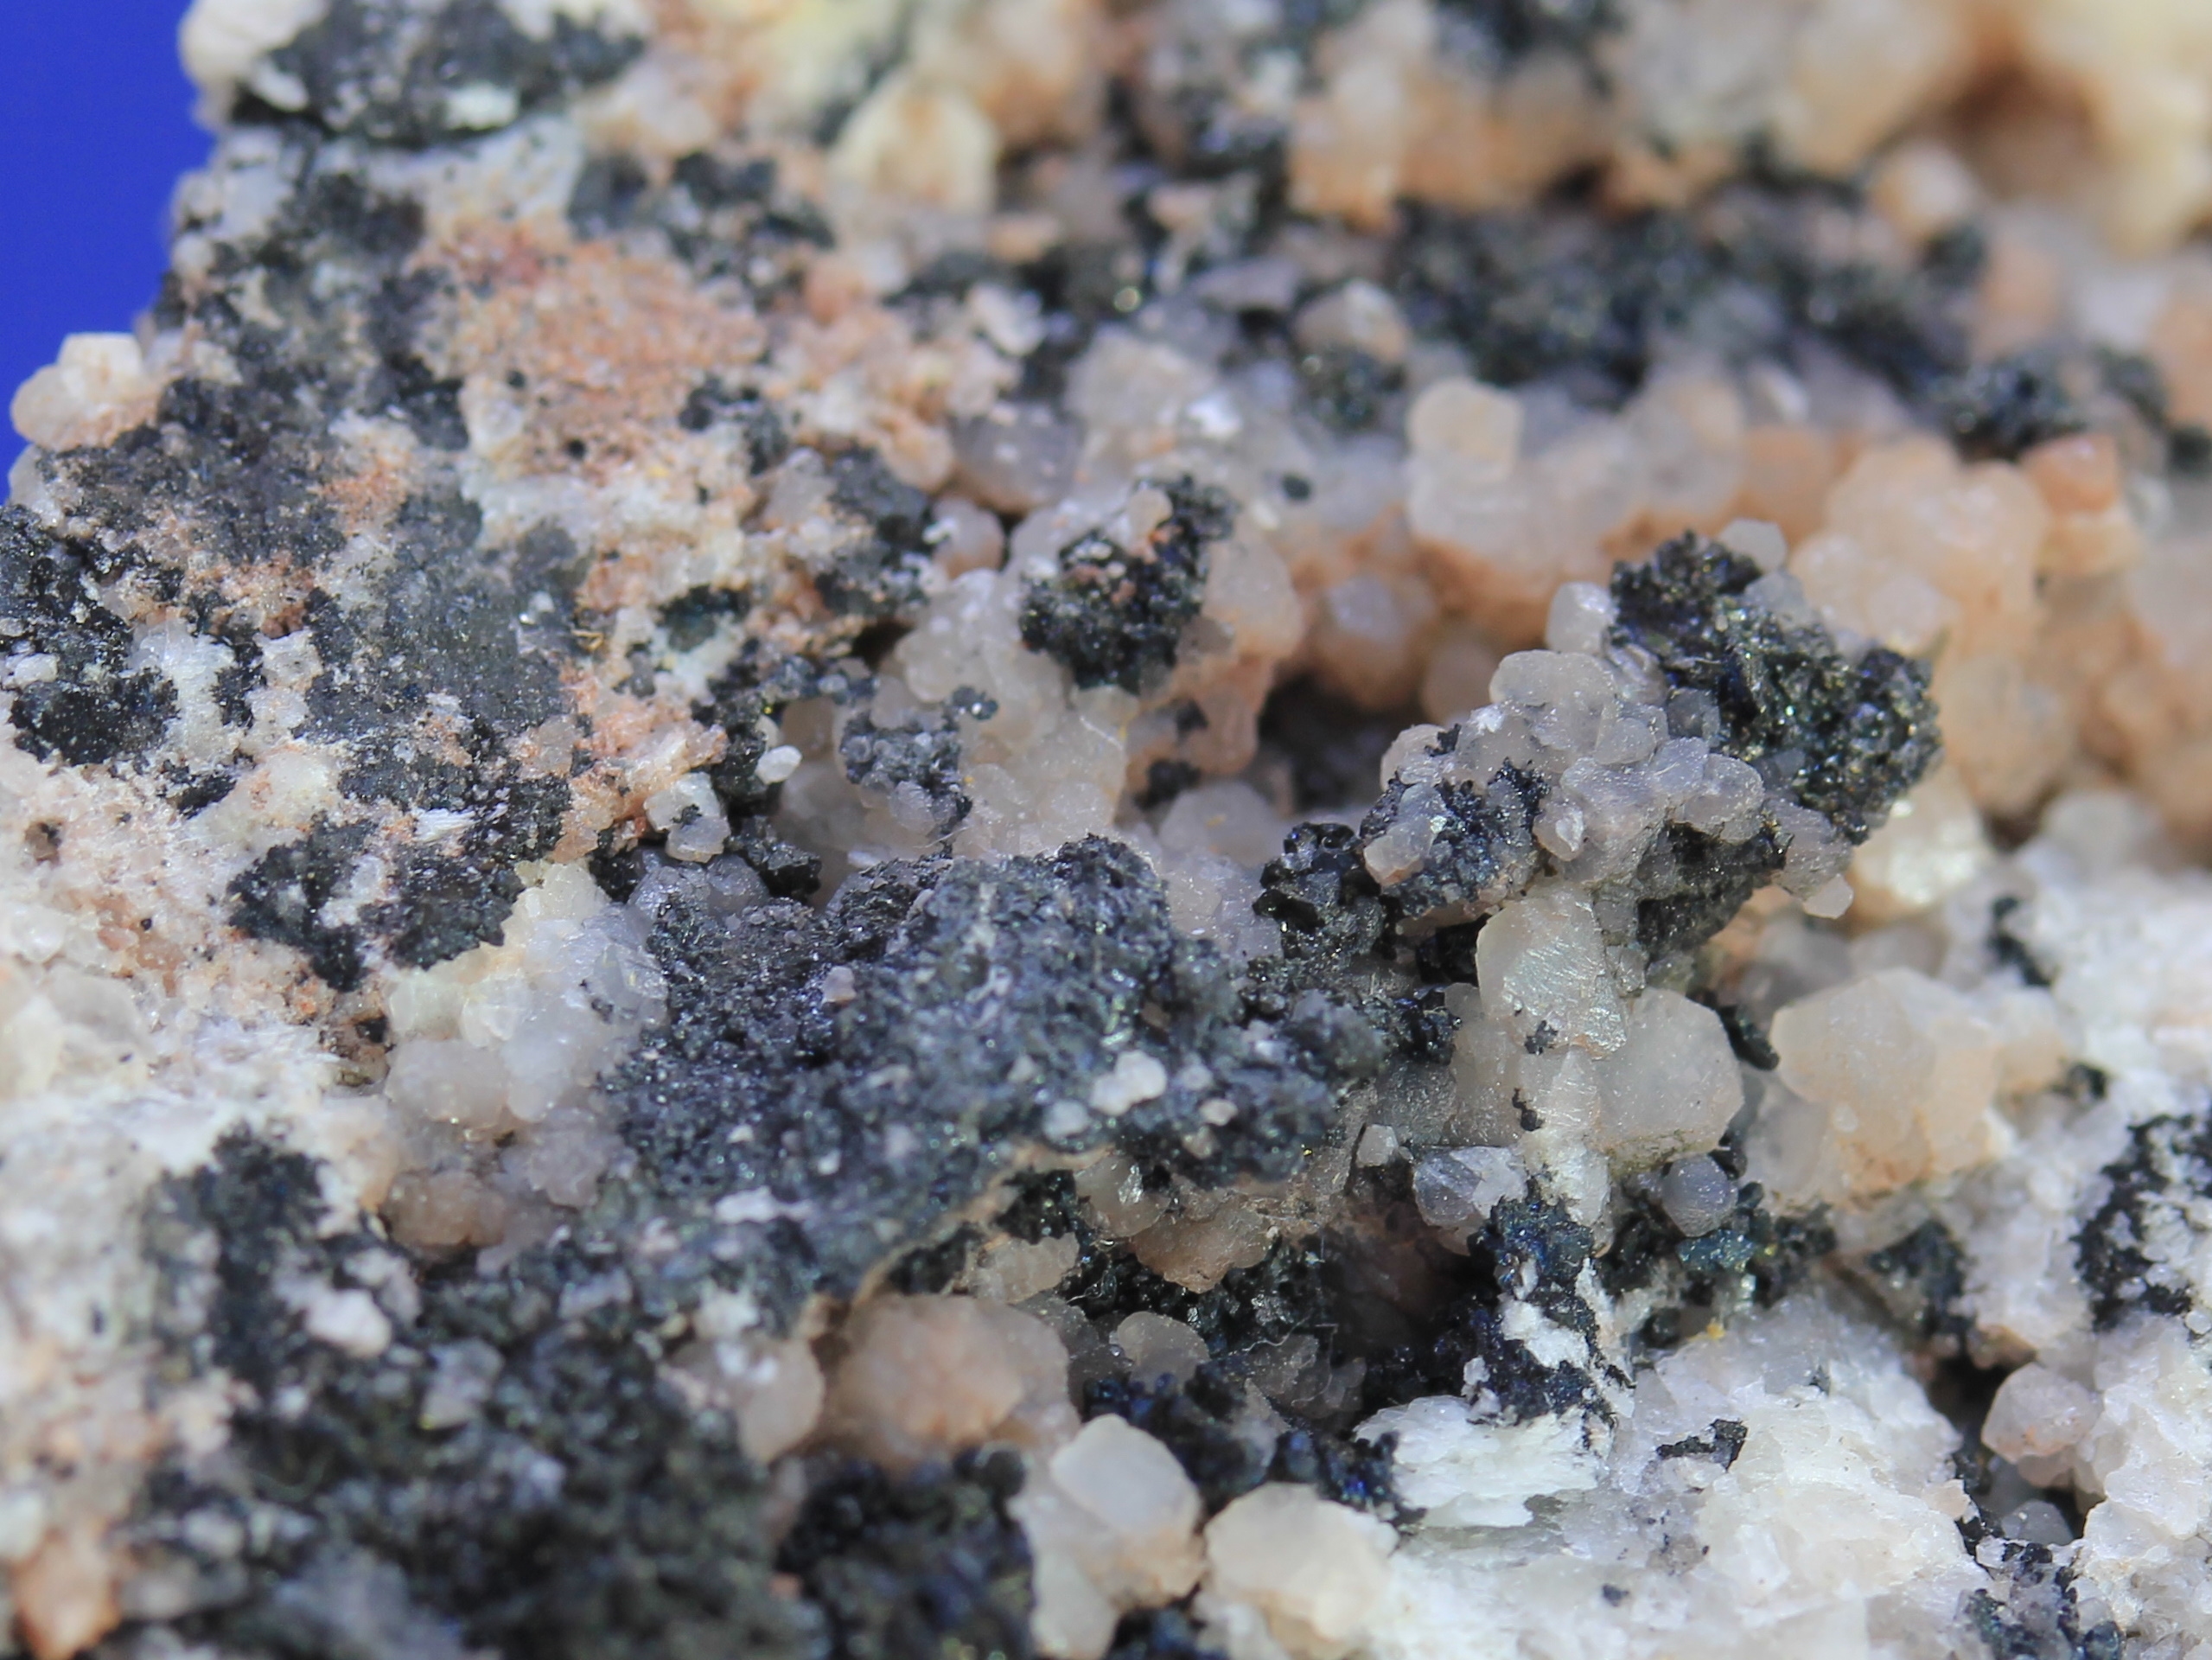 Polybasite on a calcite matrix